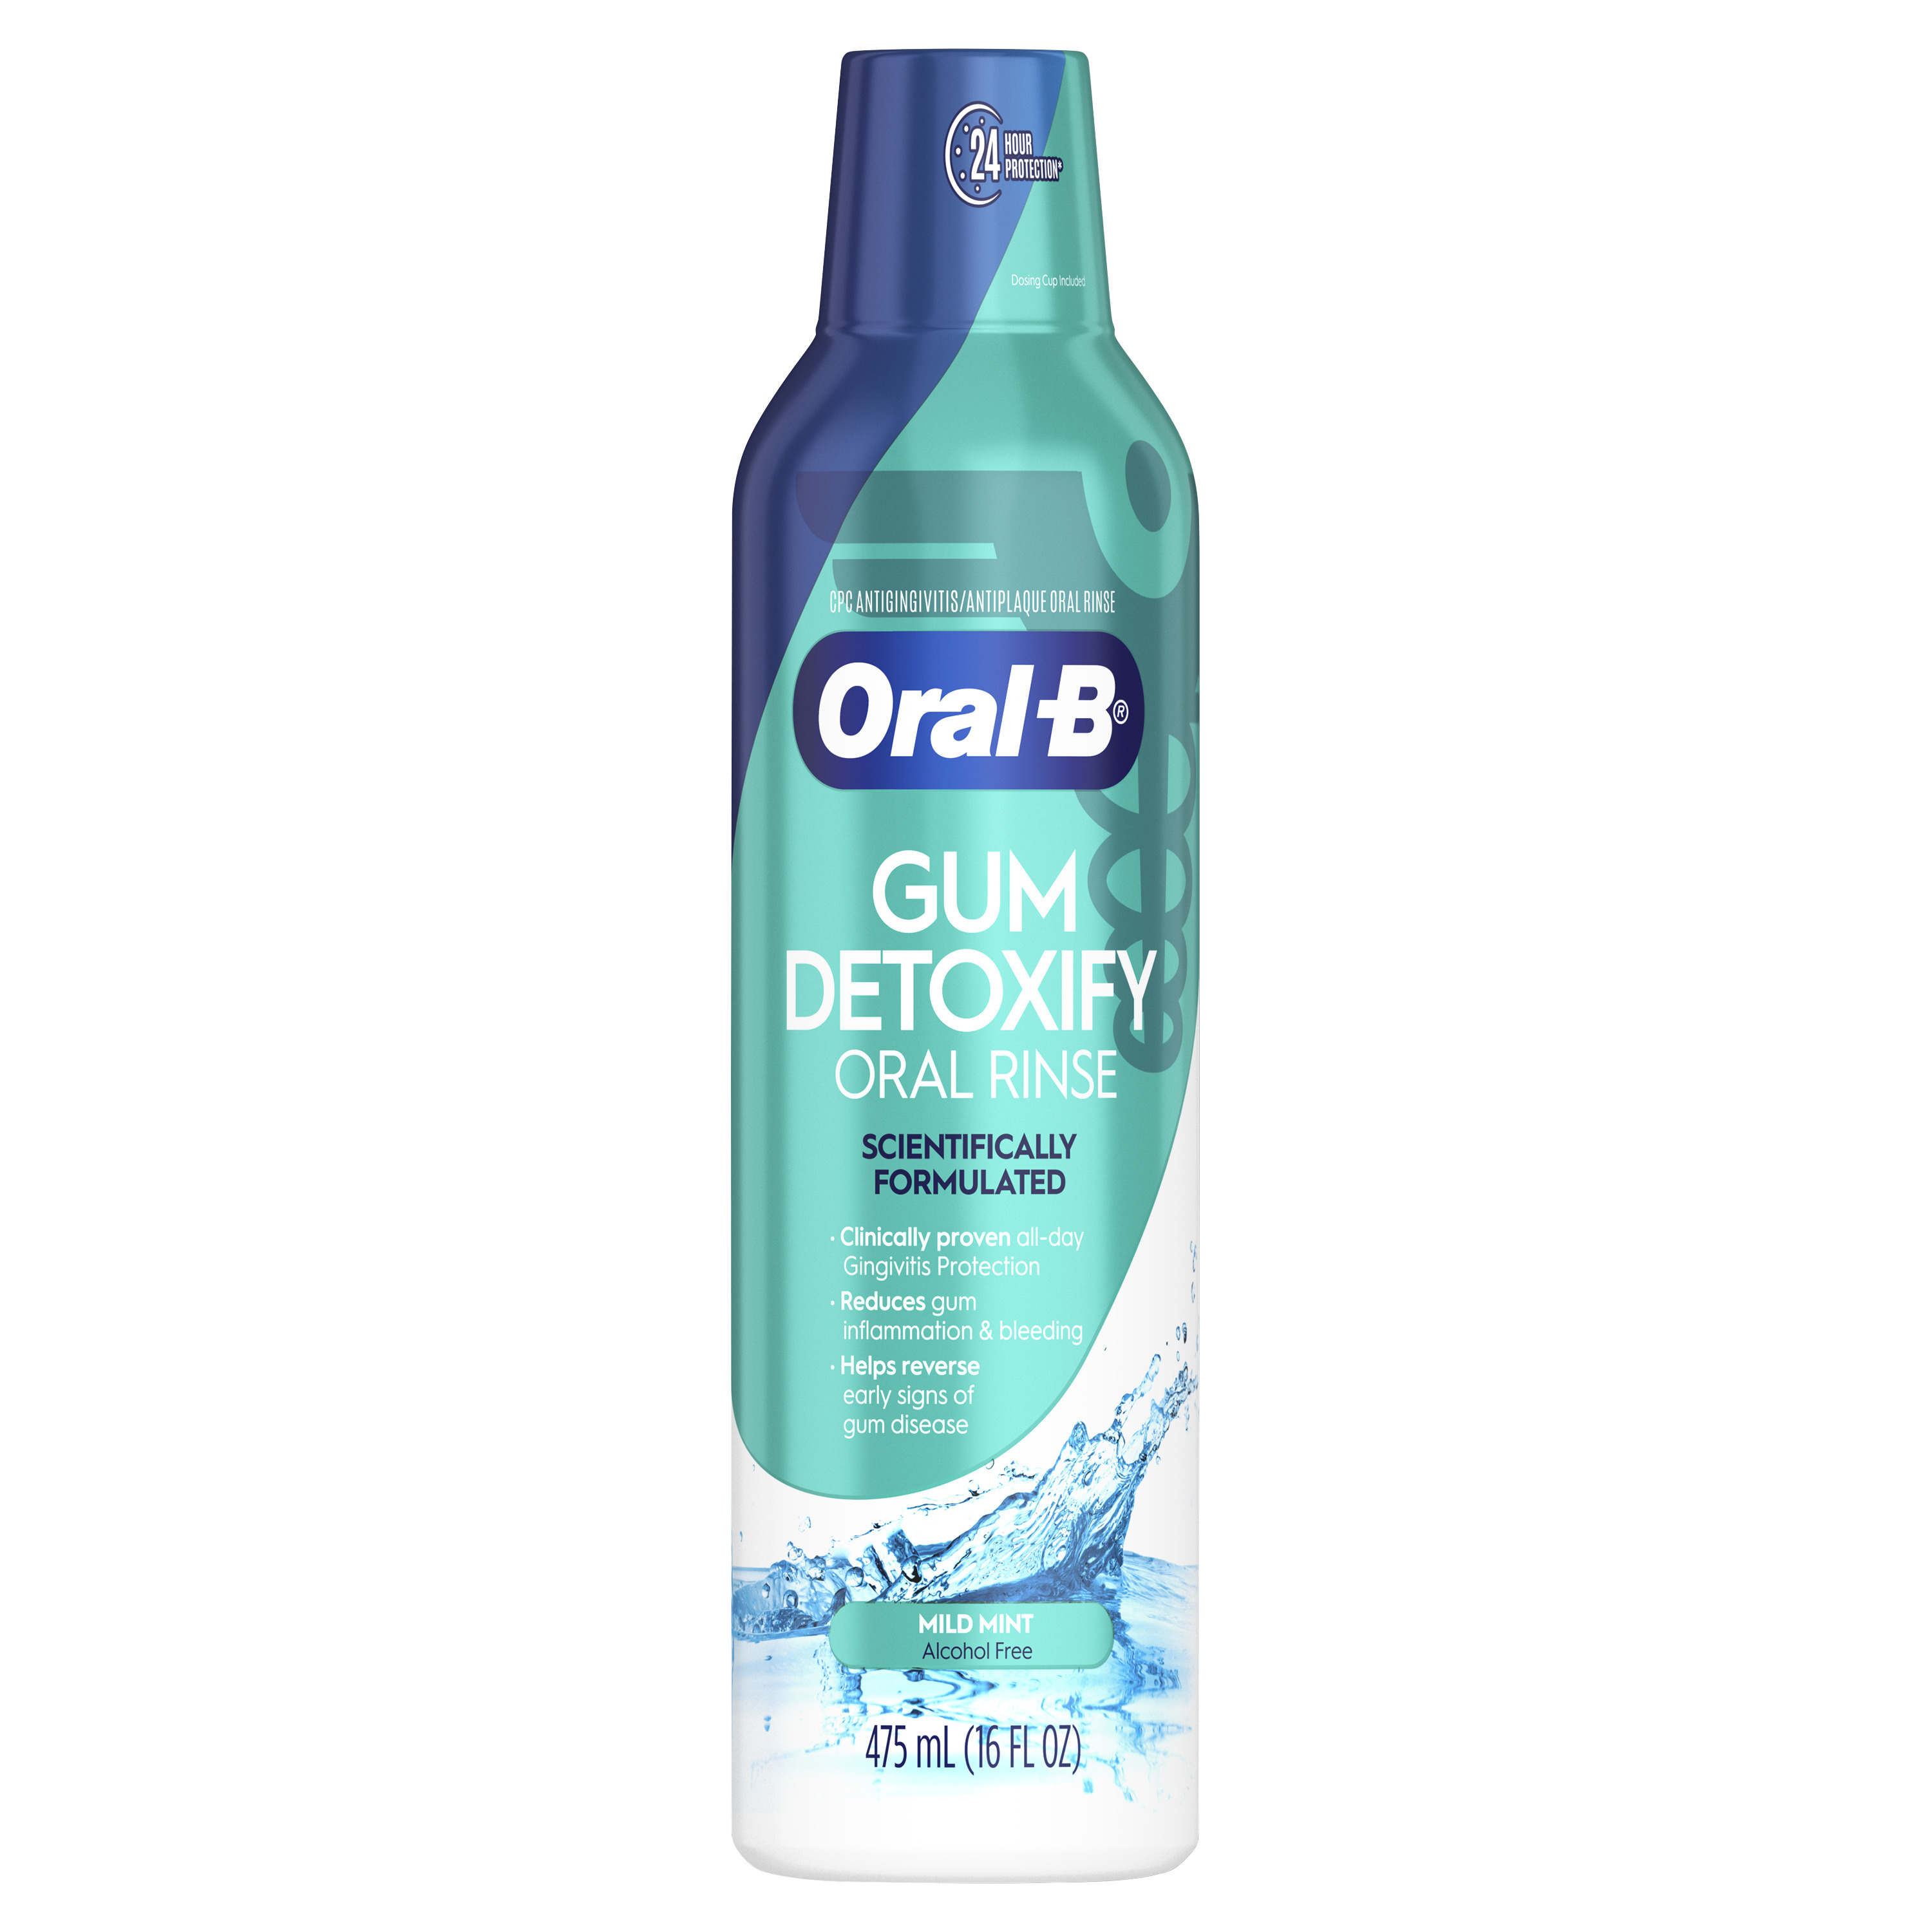 Oral-B Gum Detoxify Mouthwash Oral Rinse, Mild Mint Flavor, 16 fl oz - image 1 of 13